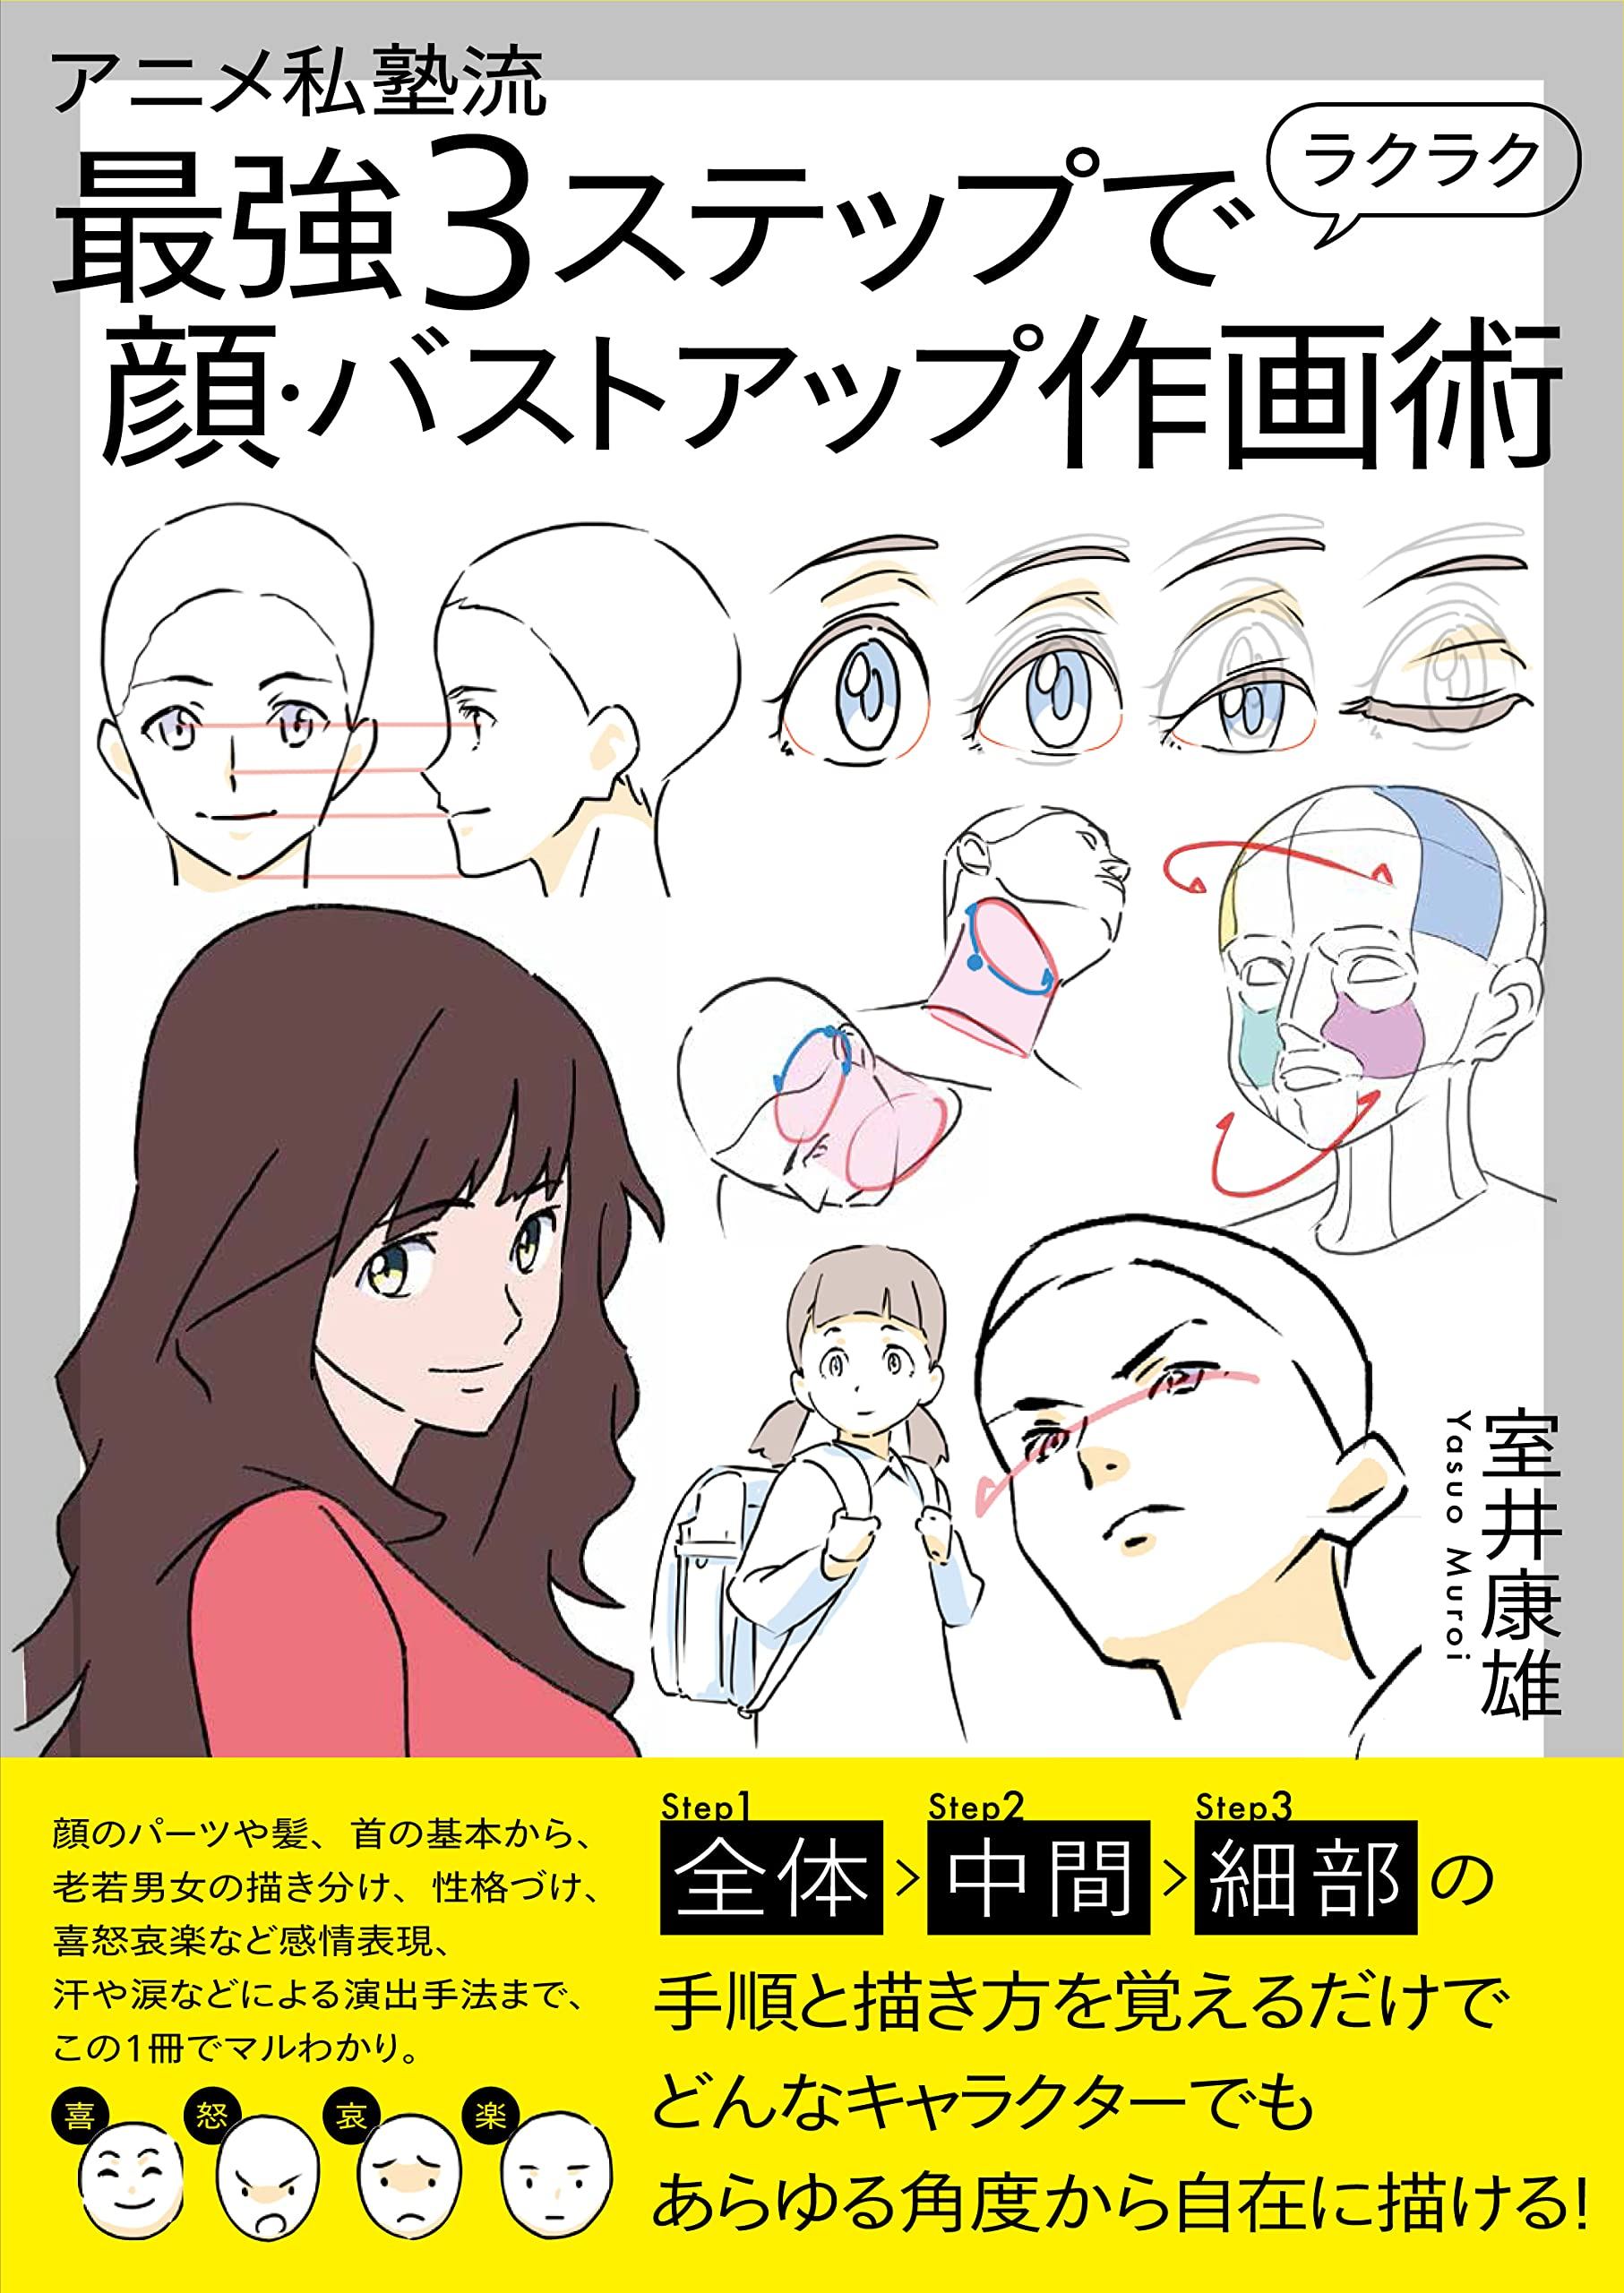 Anime face drawing, Manga drawing tutorials, Drawing heads